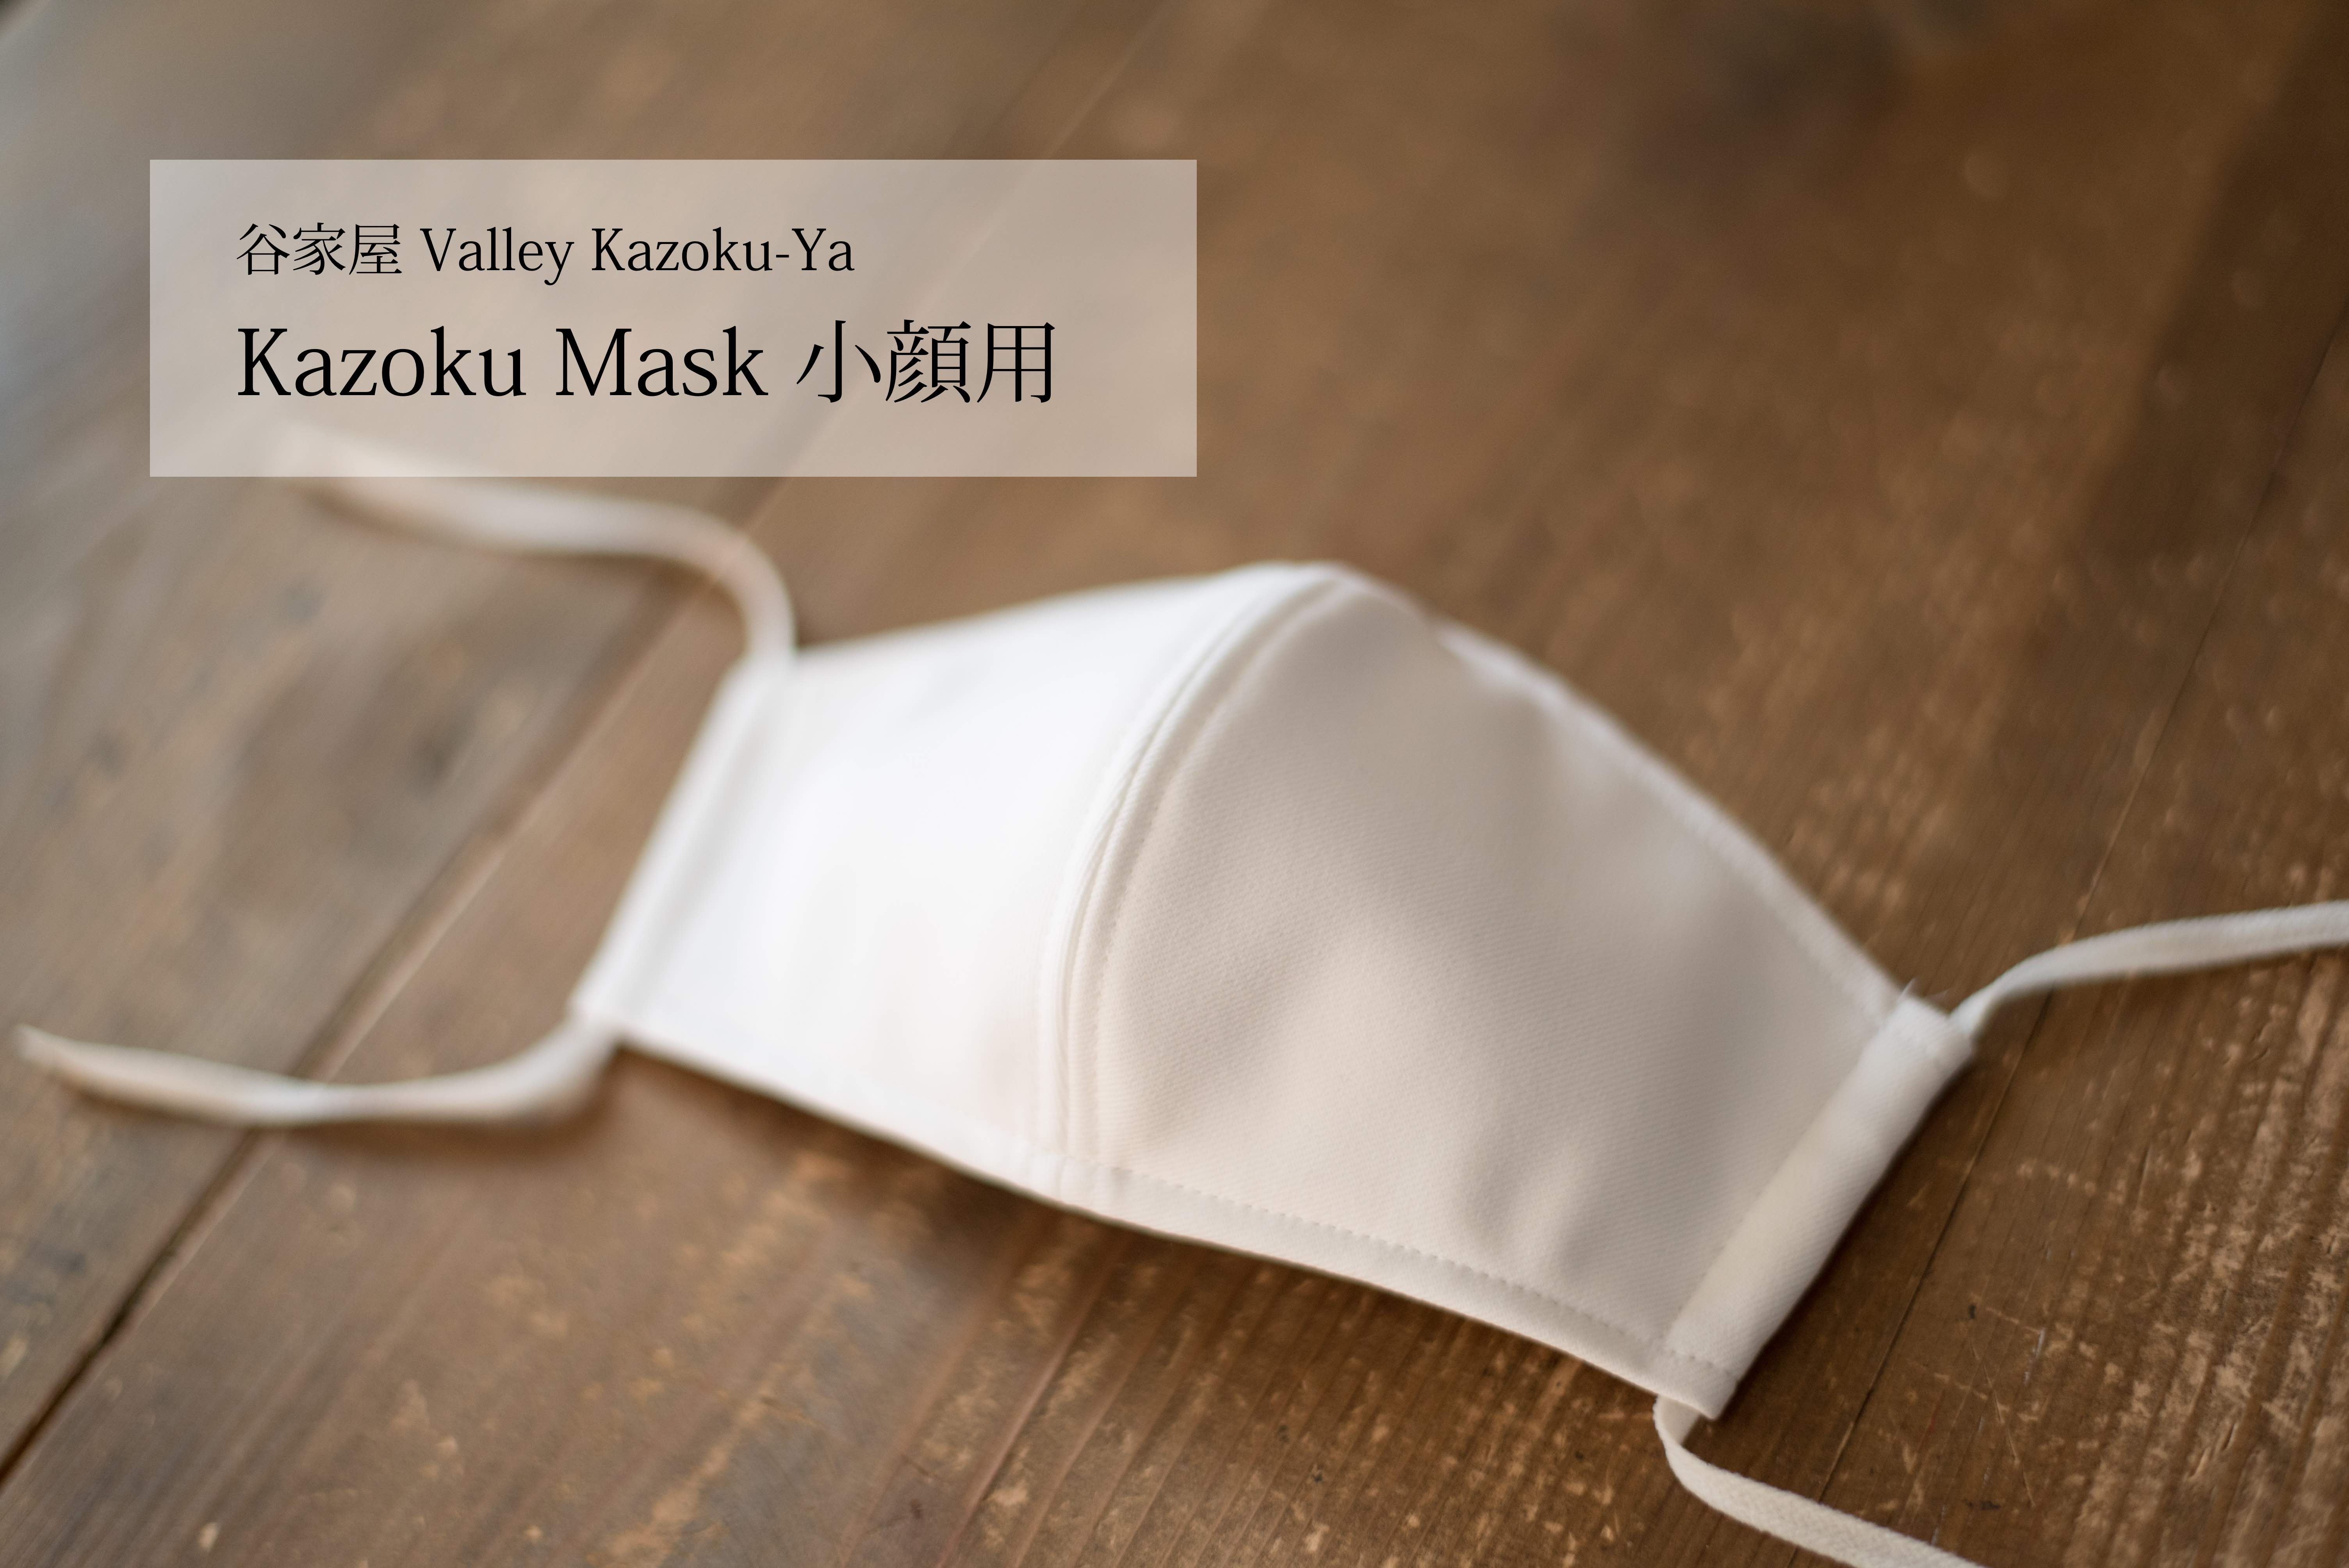 Kazoku Mask 再販します！　大口は別途対応します。